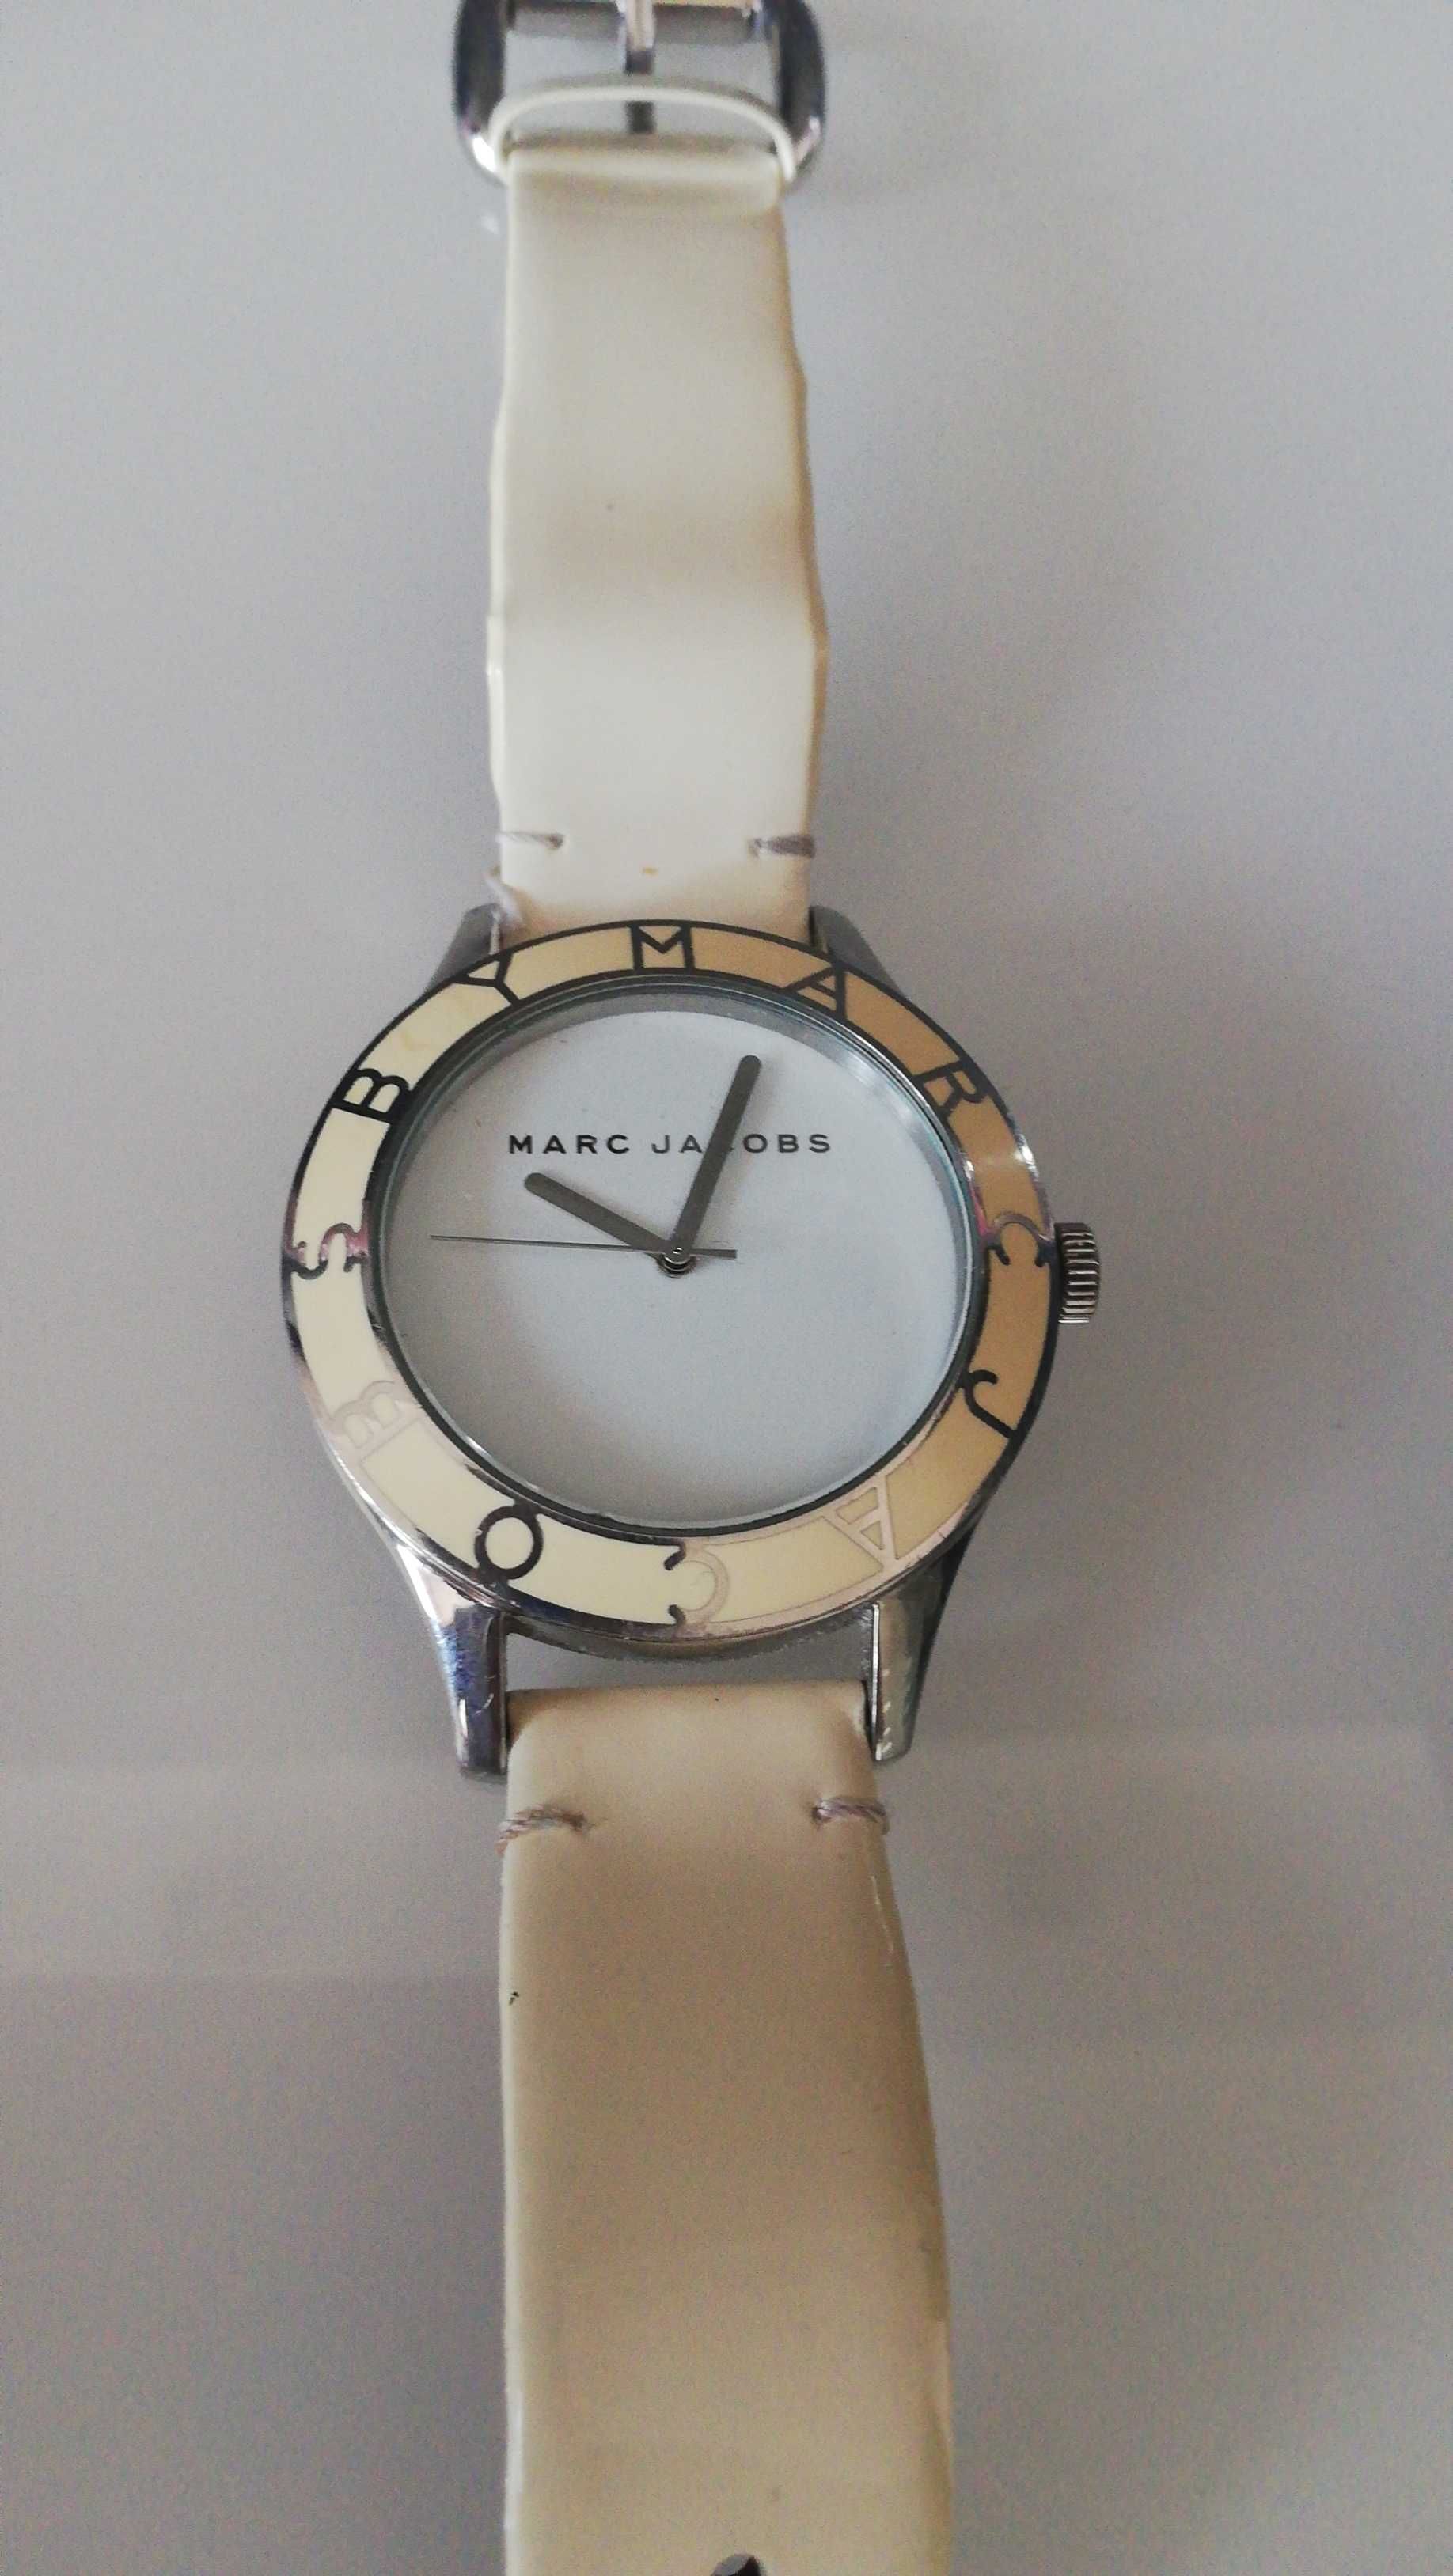 Marc Jacobs oryginalny zegarek